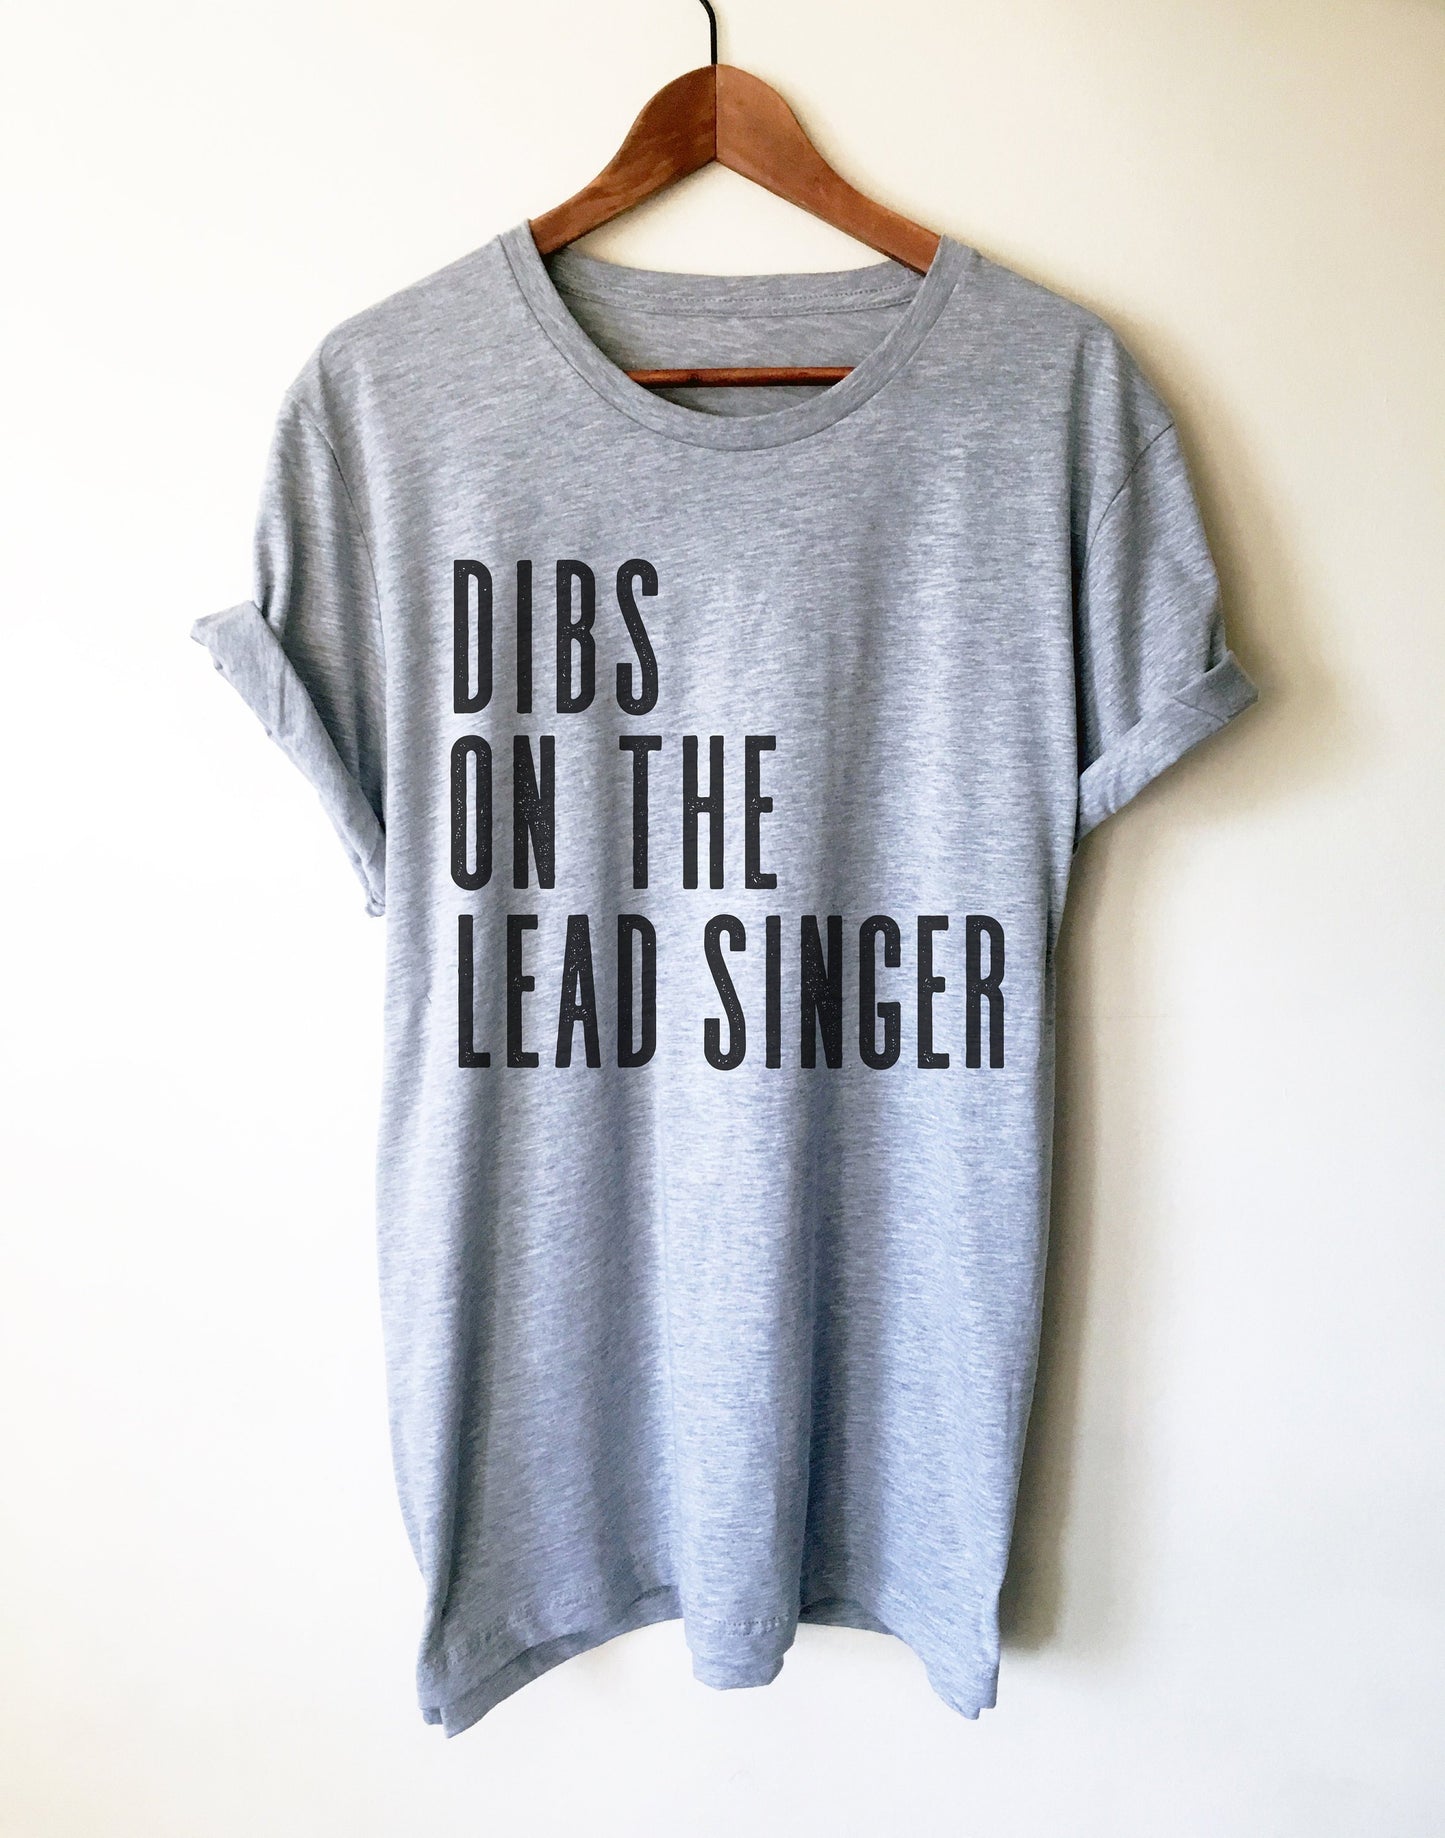 Dibs On The Lead Singer Unisex Shirt - Band shirt, Concert shirt, Concert shirts, Lead band singer, Music festival shirt, Concert groupie